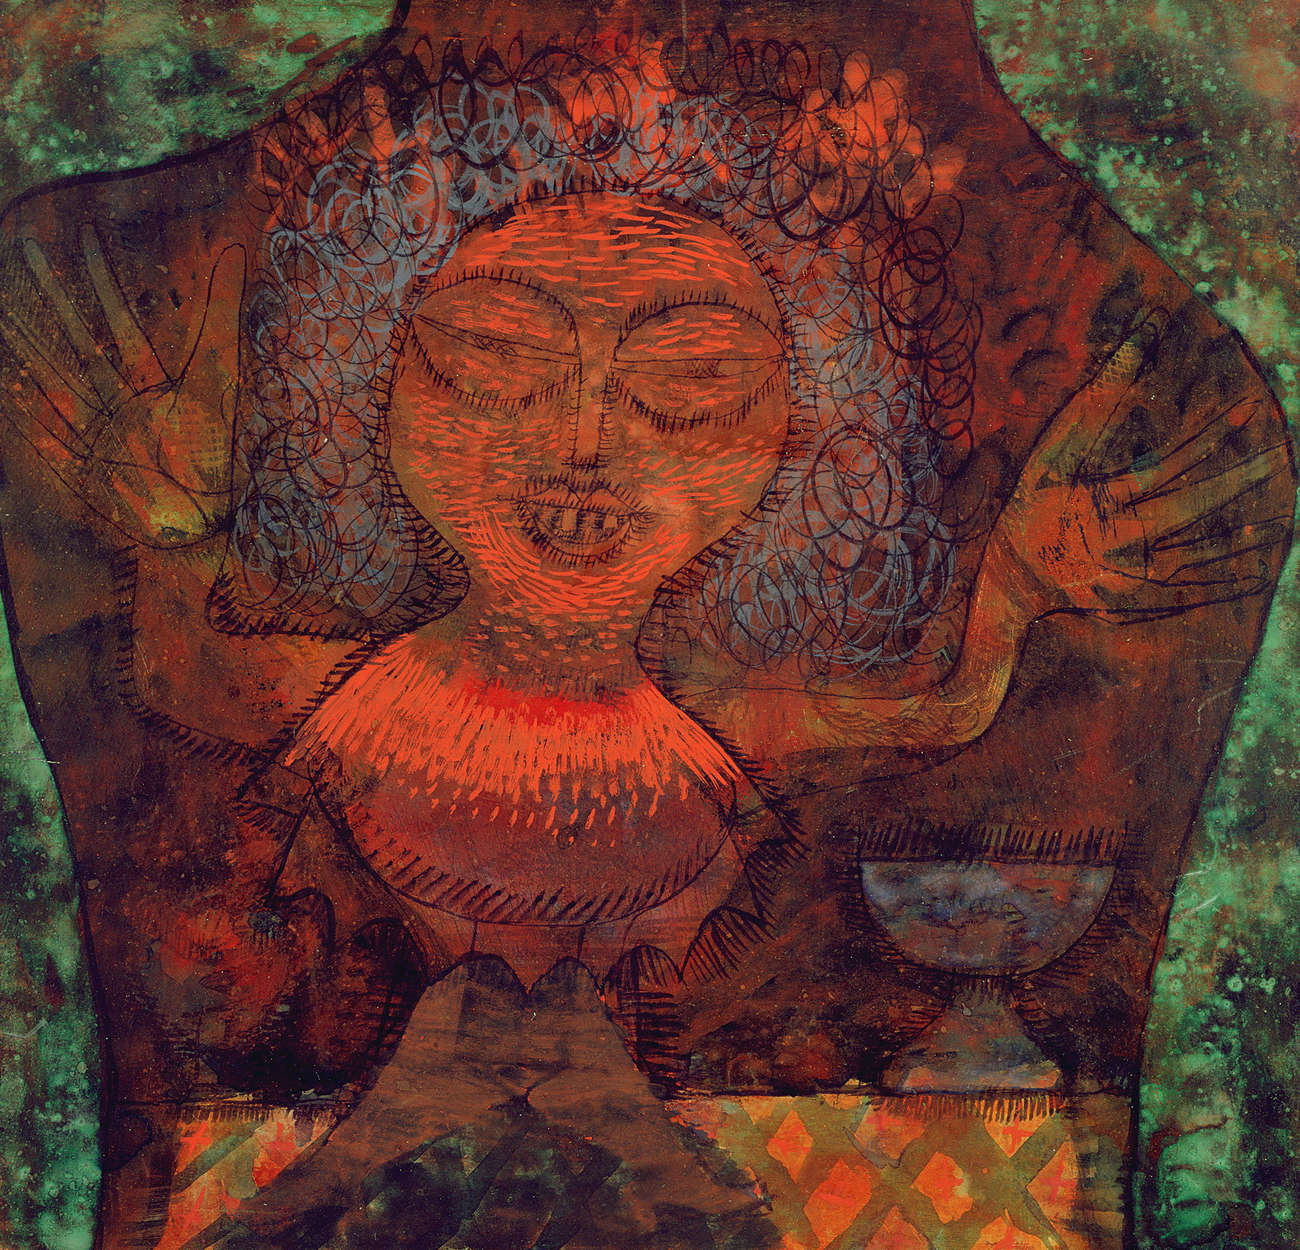             Fototapete "Prophet" von Paul Klee
        